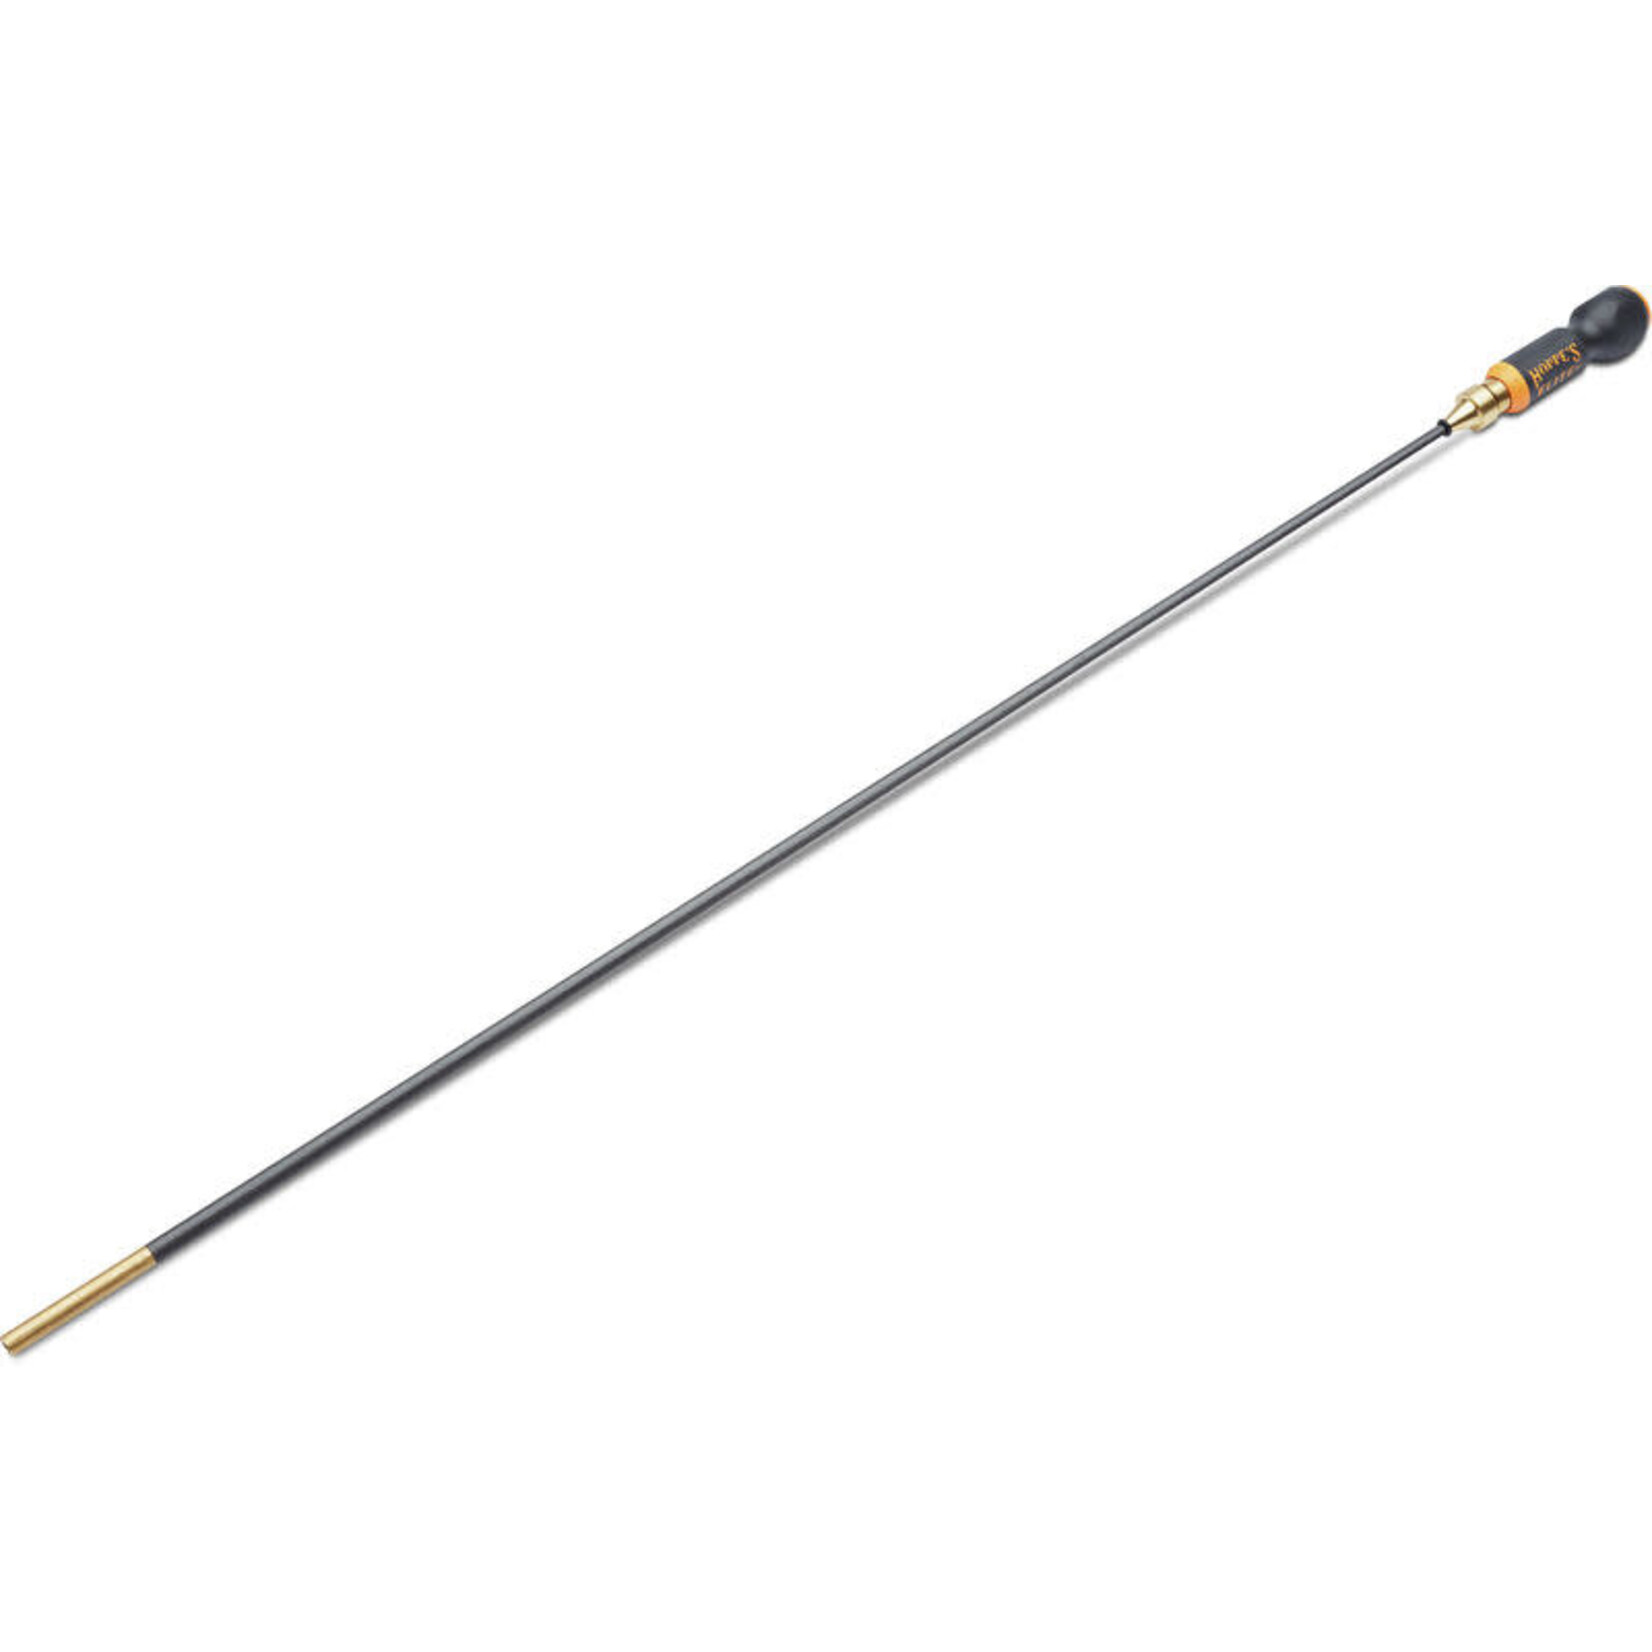 Hoppe's Hoppe's Premium Cleaning Rod 1 piece .17-.20 cal 36"